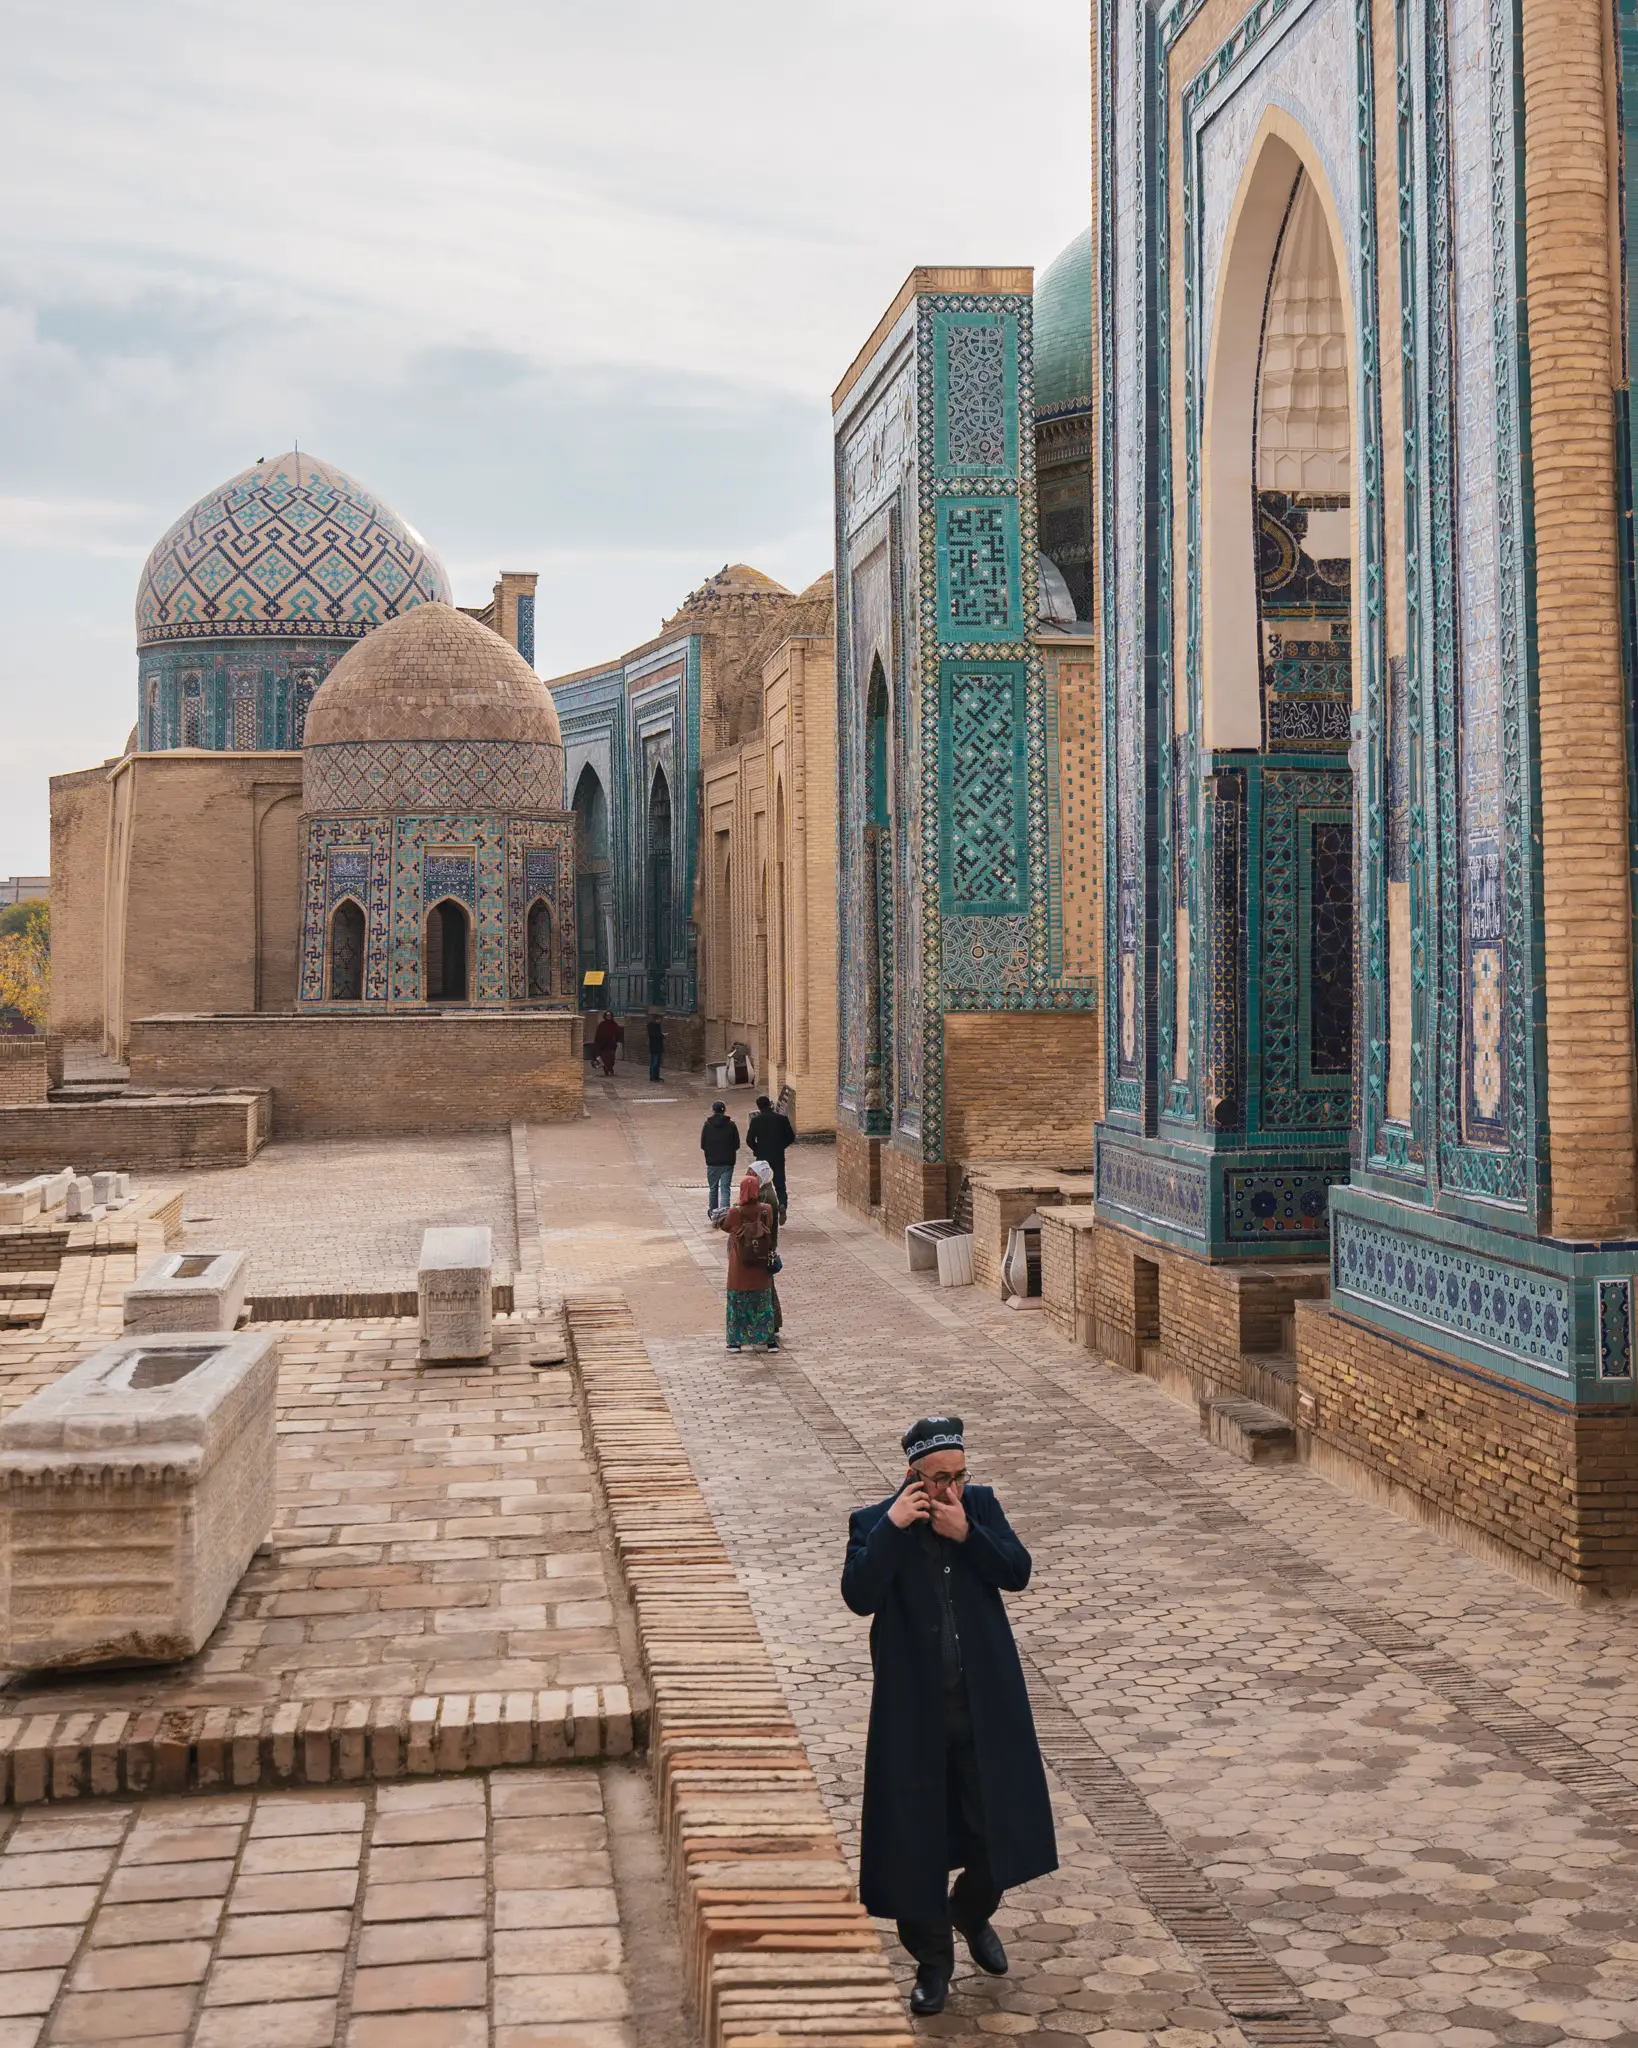 Gorgeous architecture in Samarkand, Uzbekistan